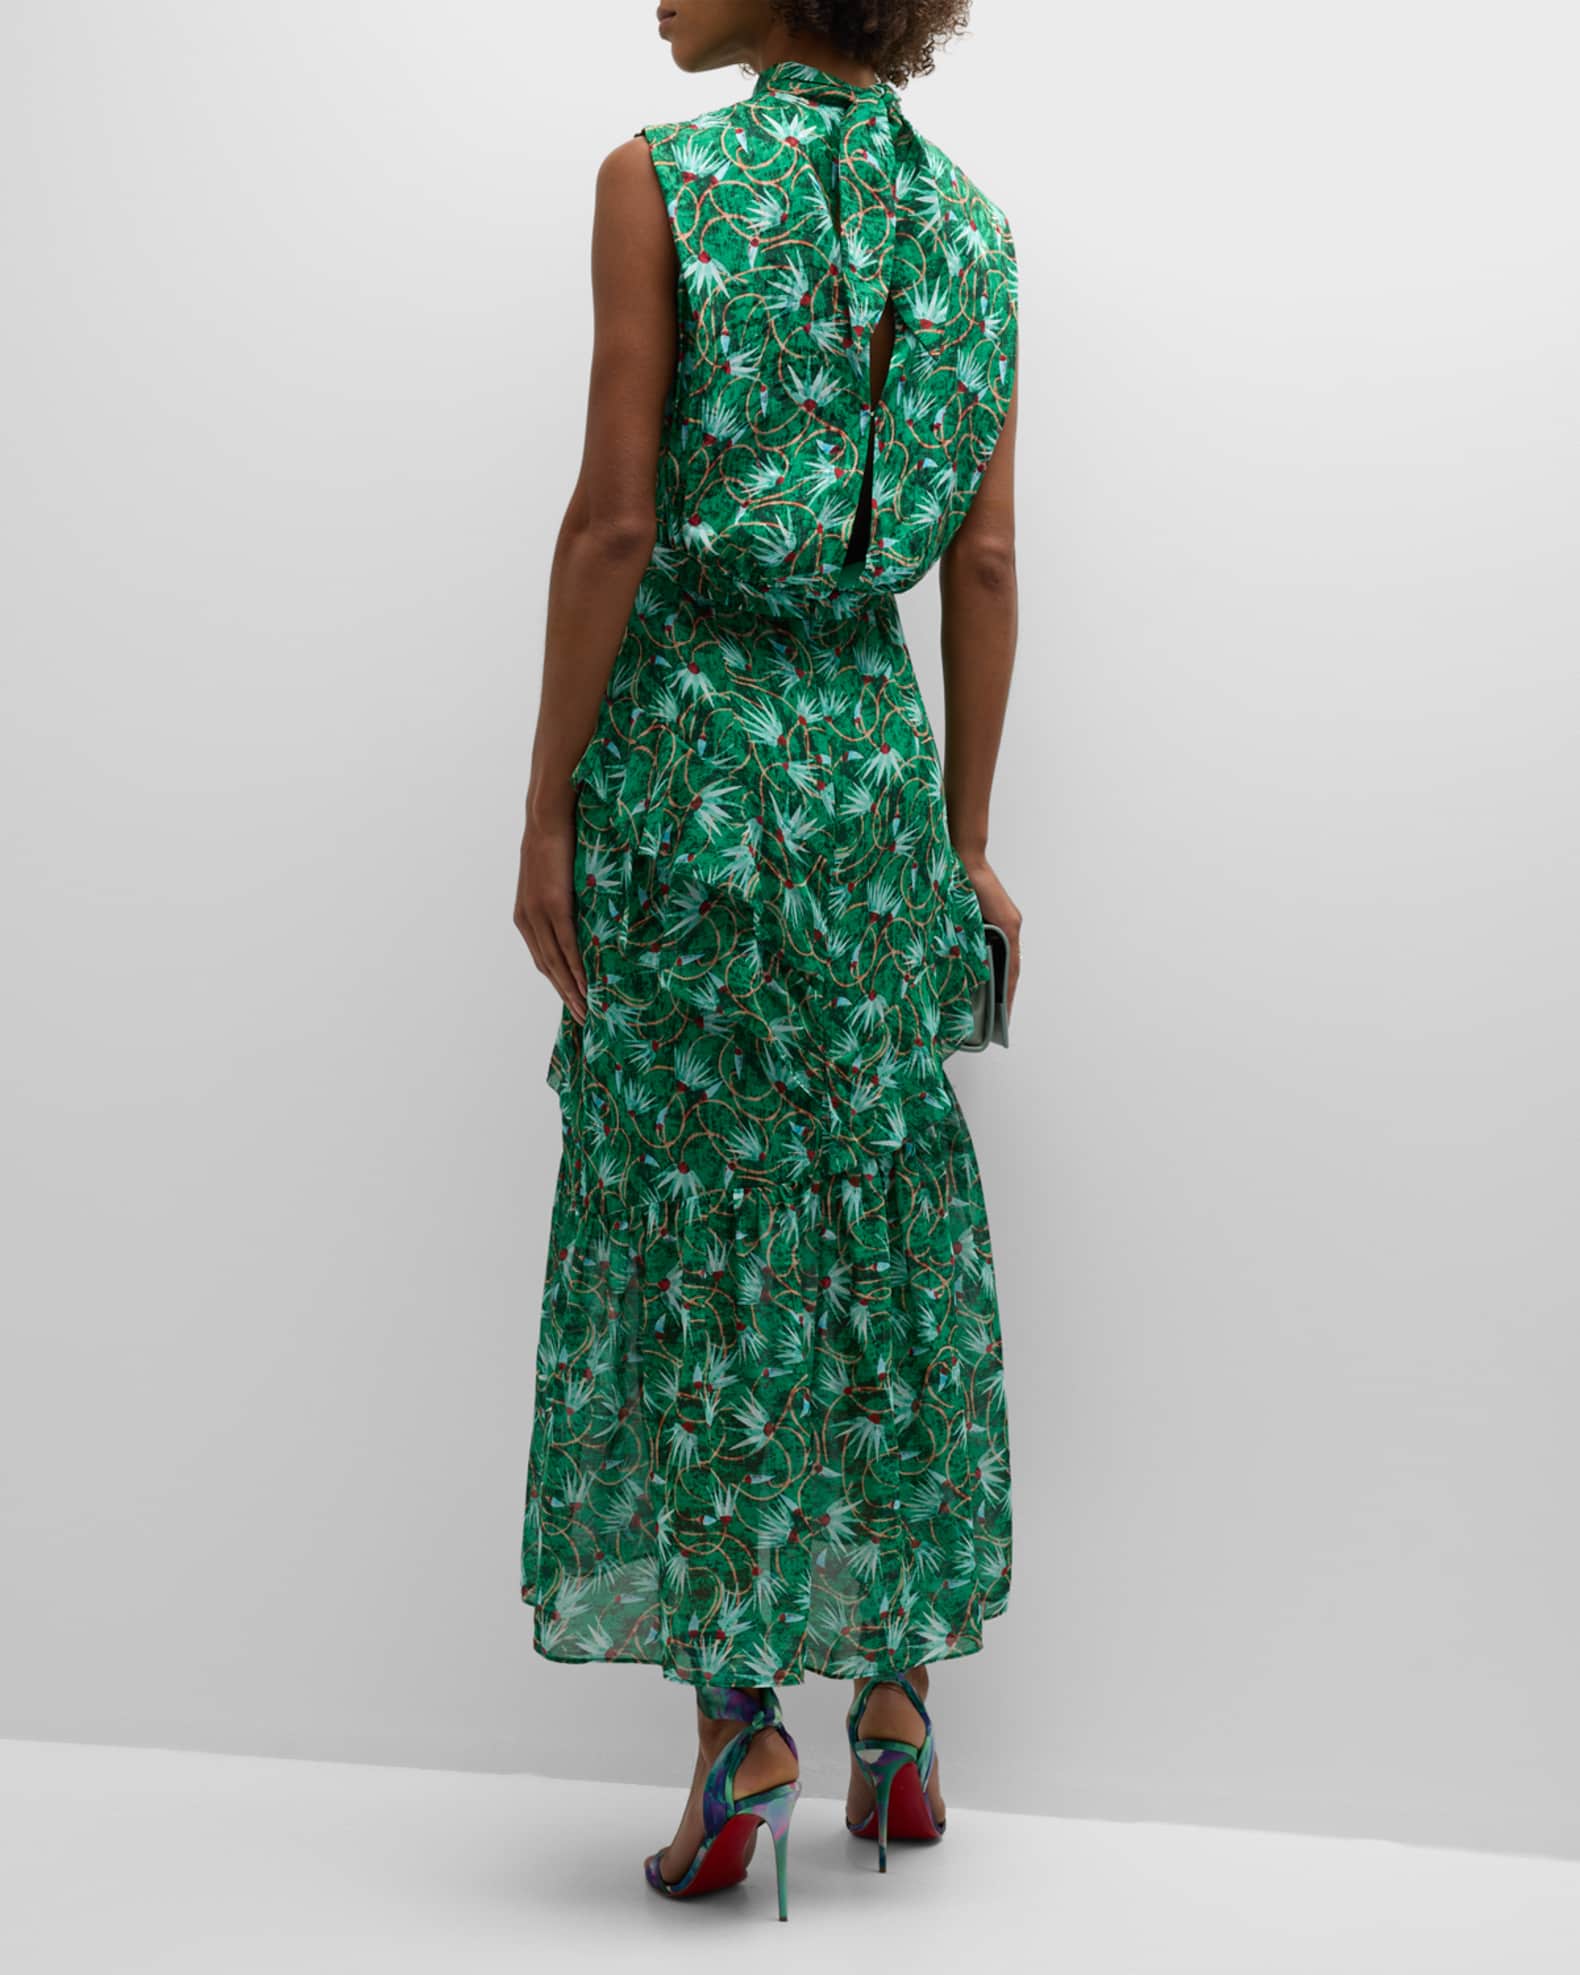 Decolletage frill green midi dress – Jasmine